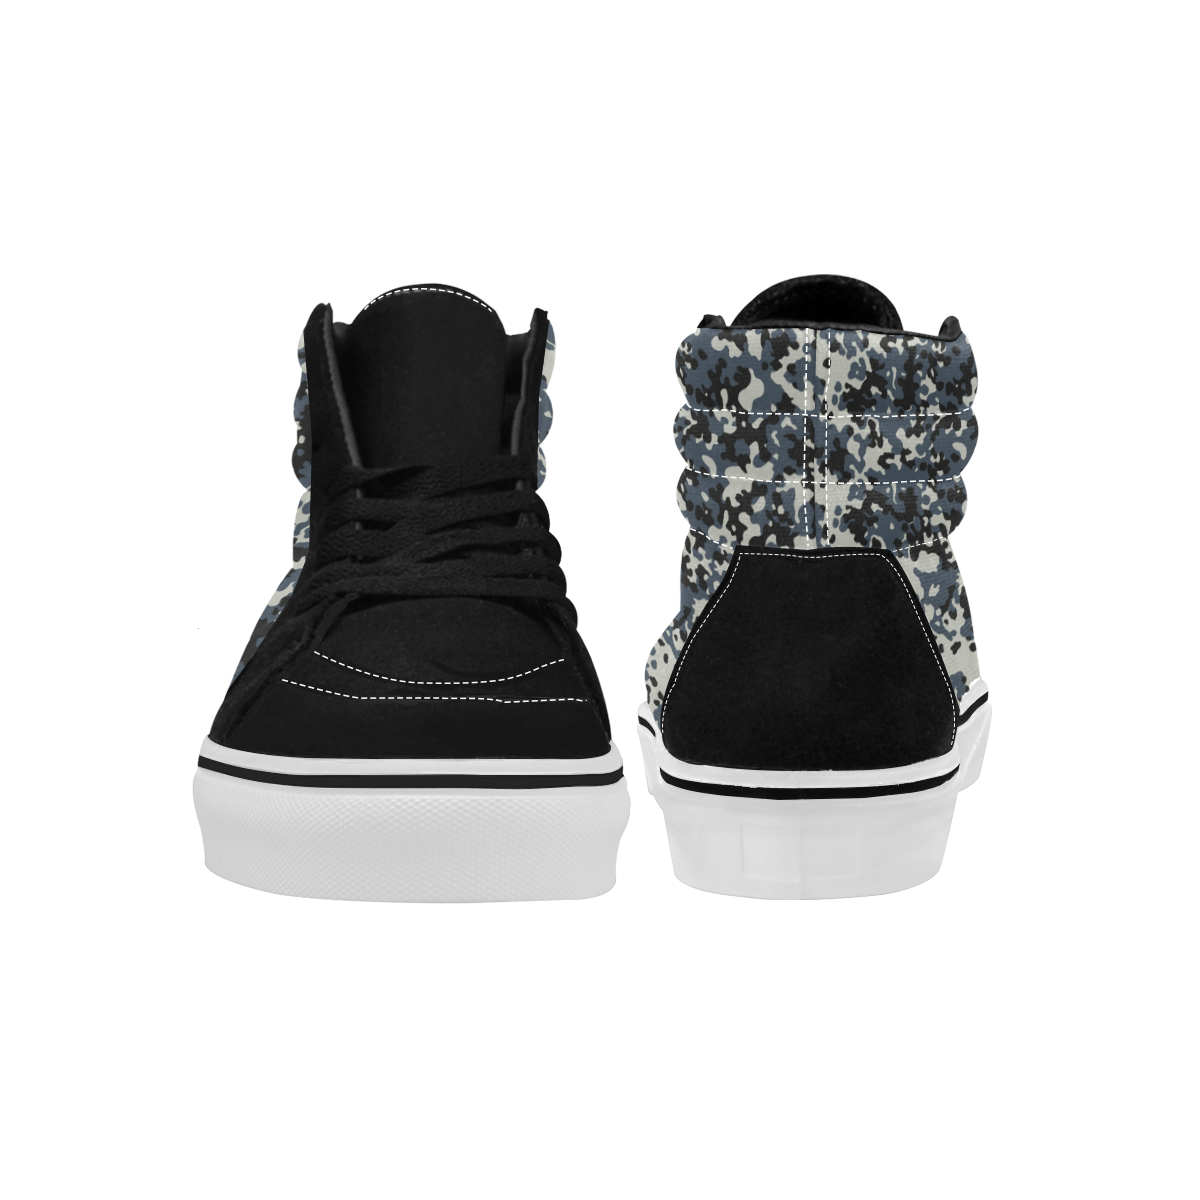 Urban City Black/Gray Digital Camouflage Women's High Top Skateboarding Shoes/Large (Model E001-1)